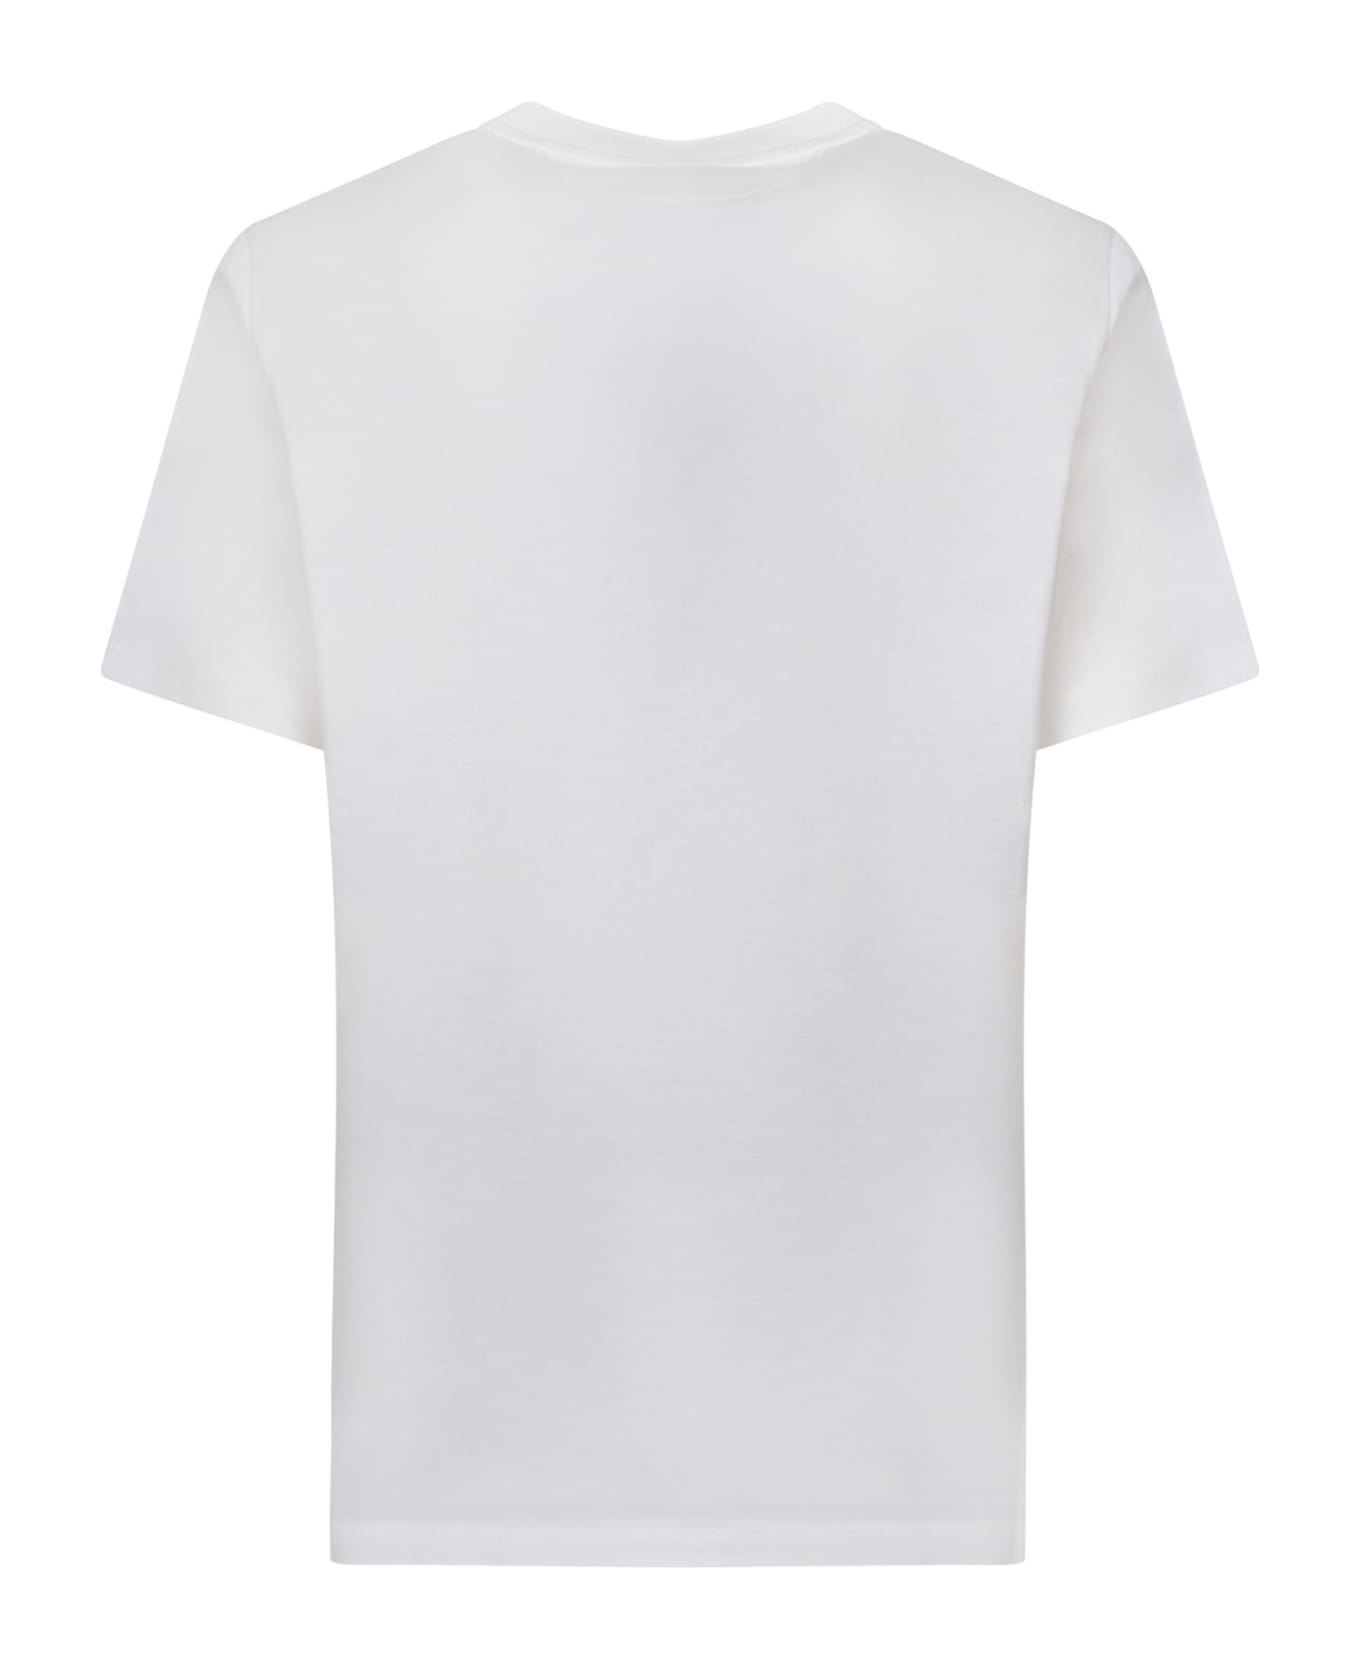 Paul Smith Pocket White T-shirt - White